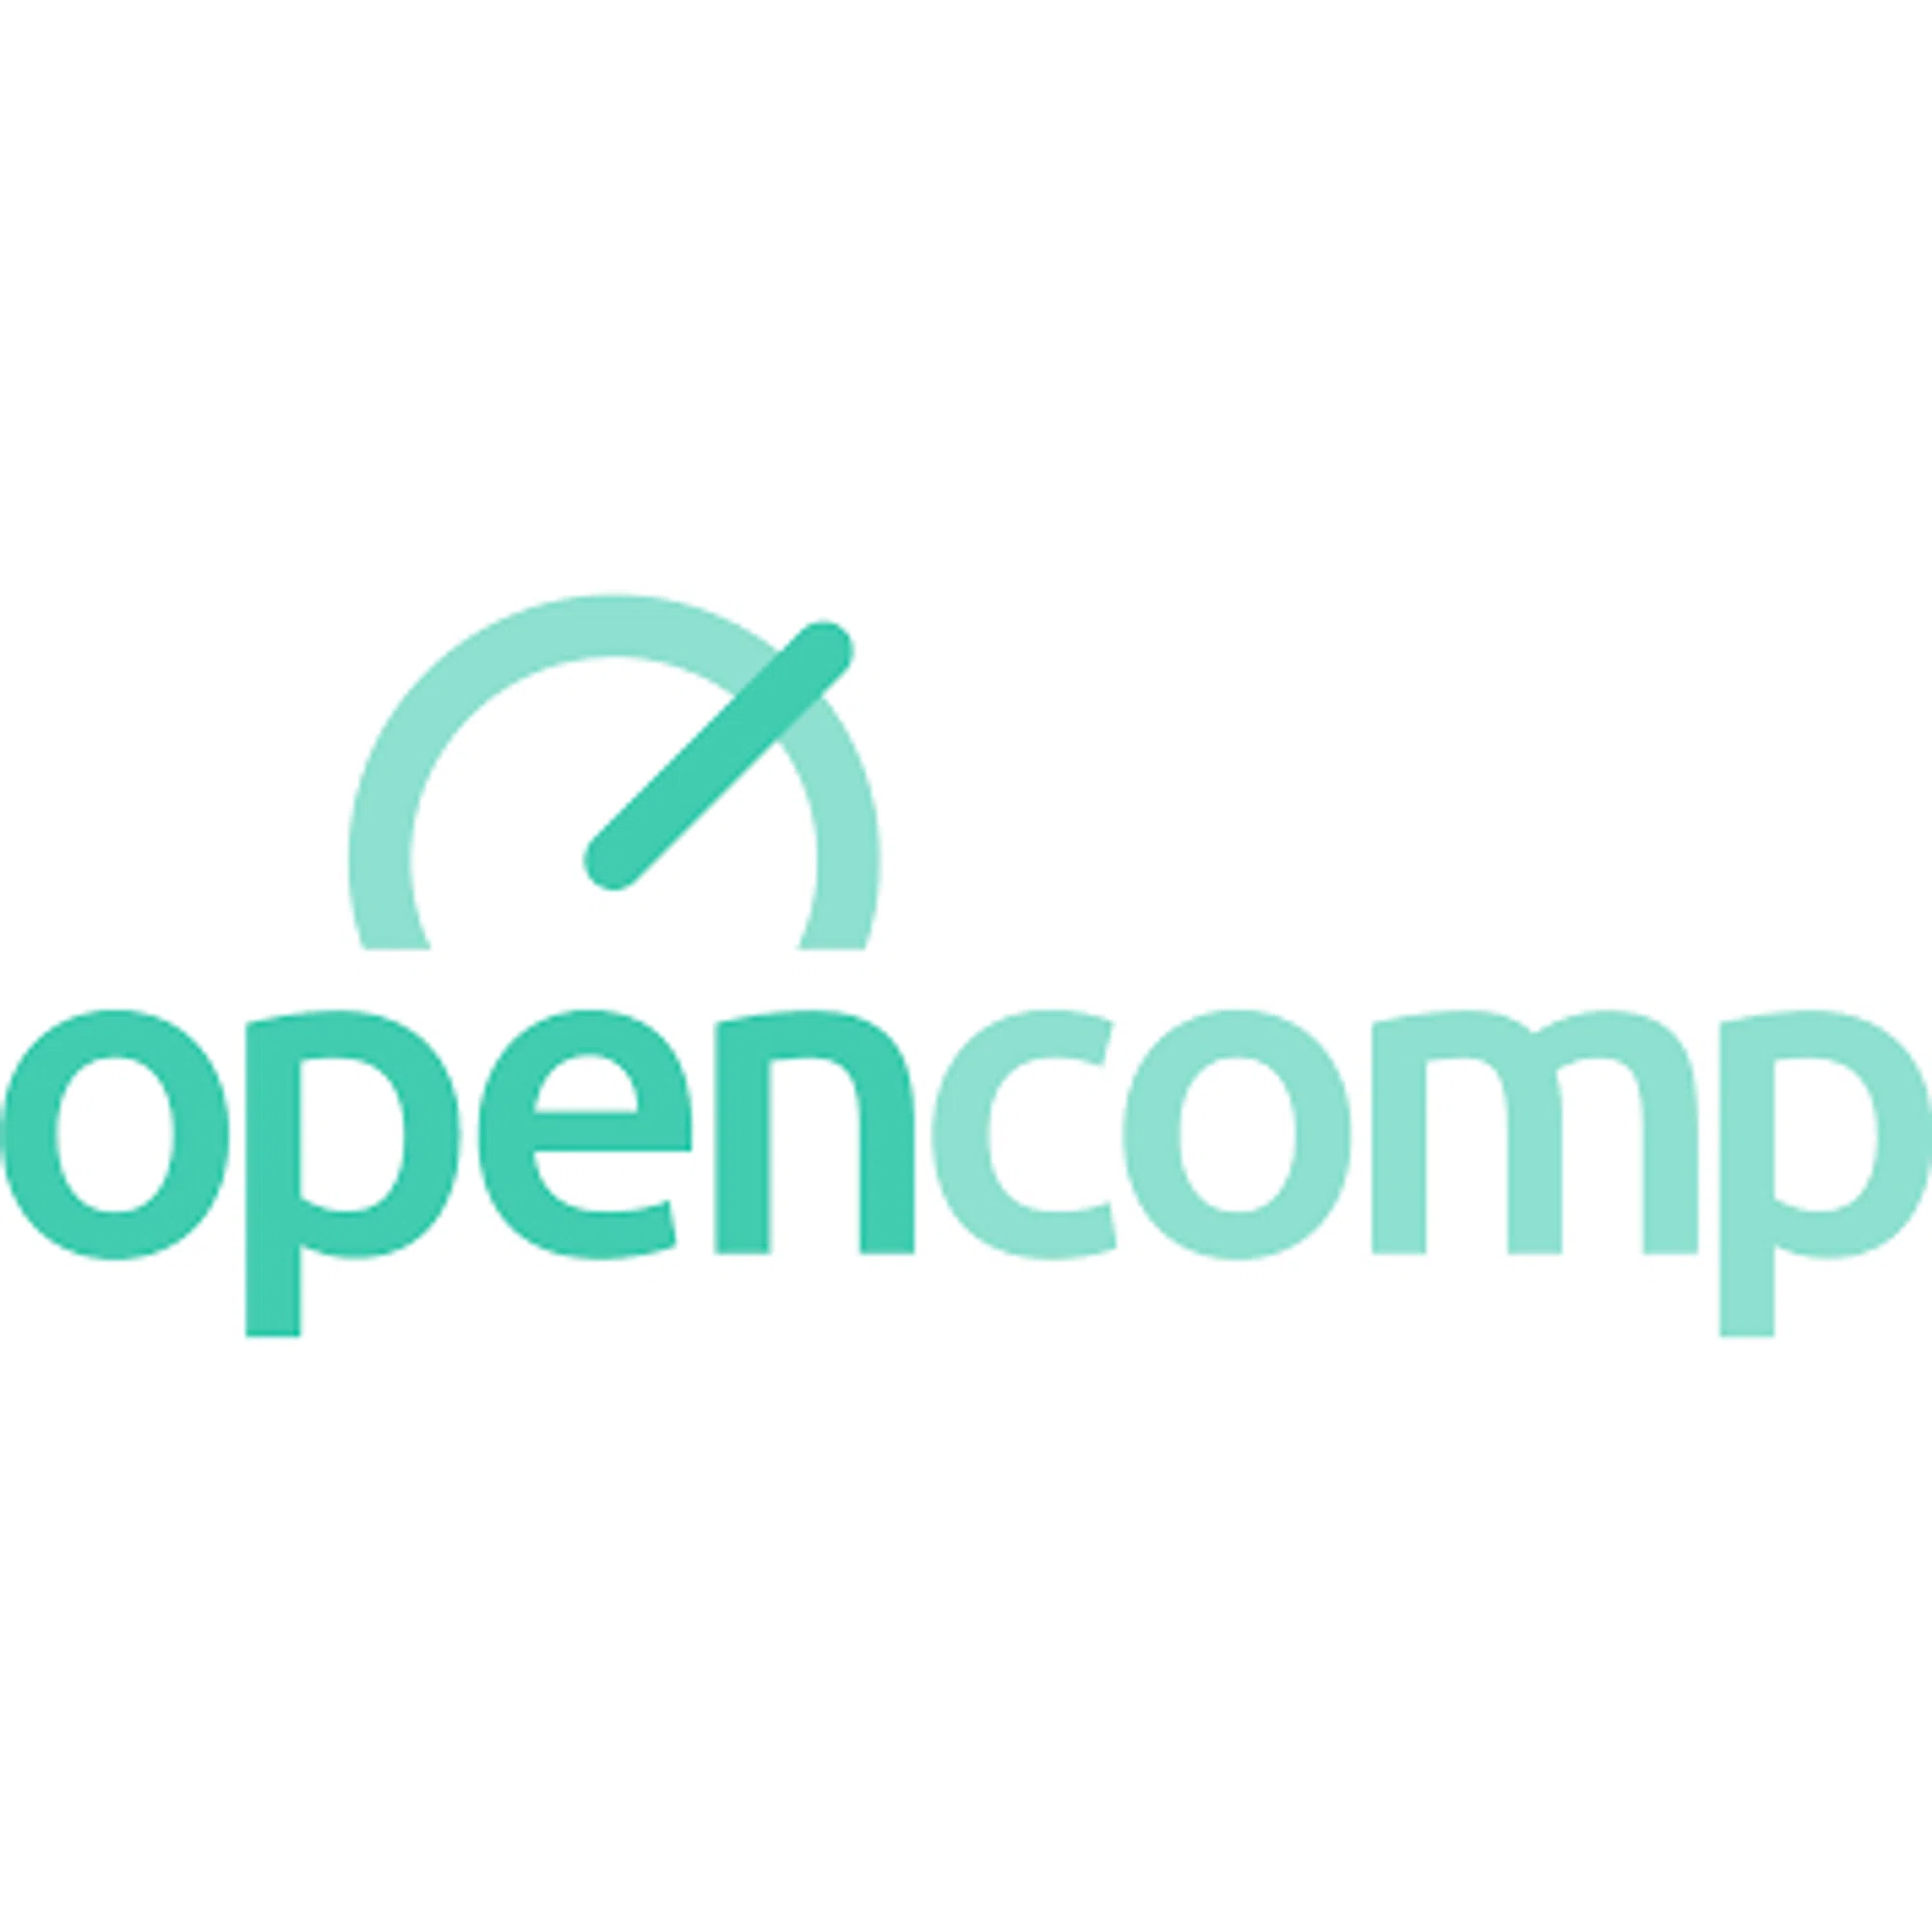 OpenComp